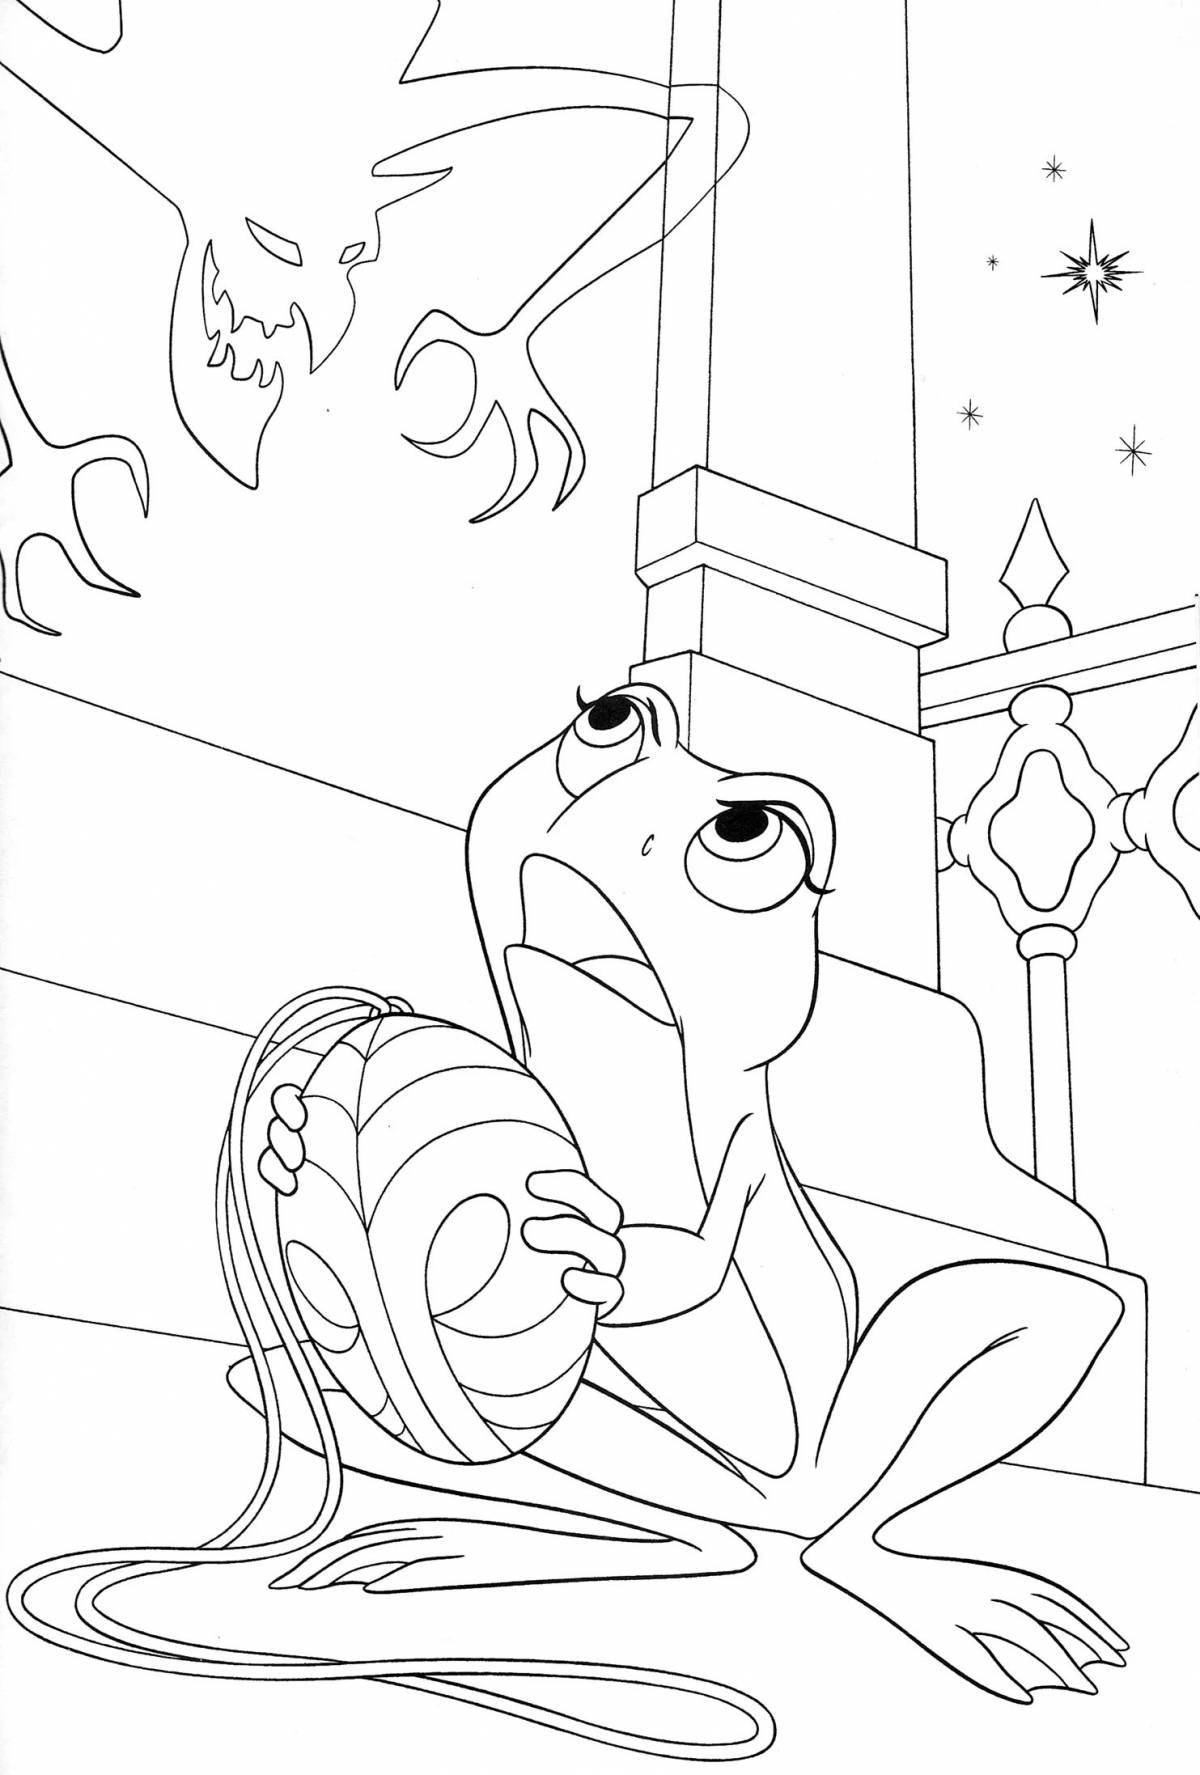 Coloring page charming frog princess